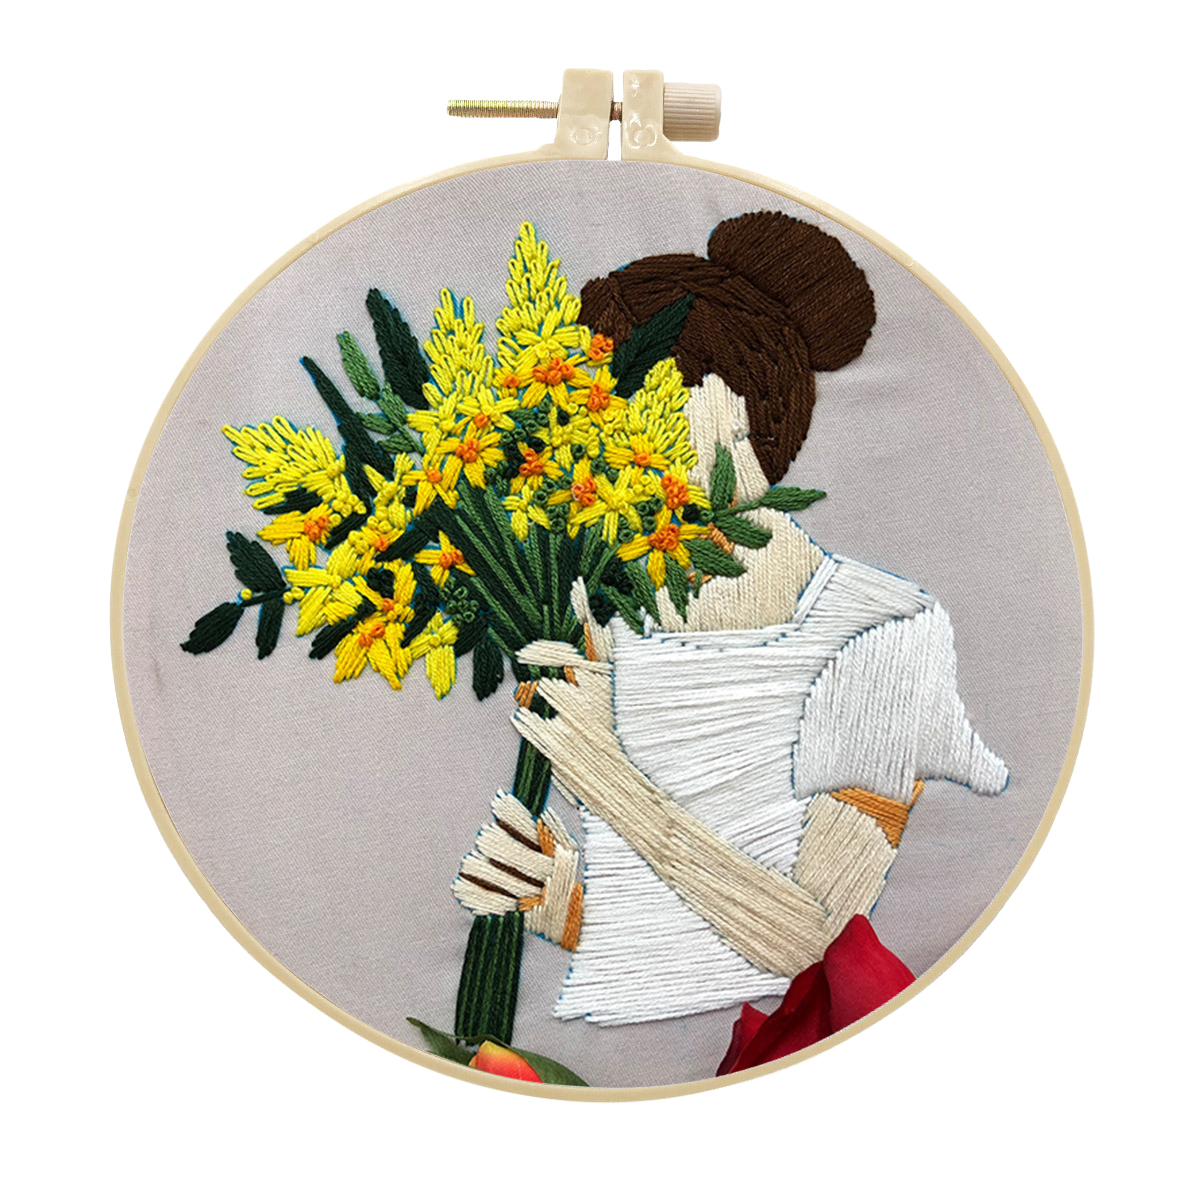 DIY Handmade Embroidery Kit Craft Cross Stitch Kits Beginner - Girl with Flowers Pattern